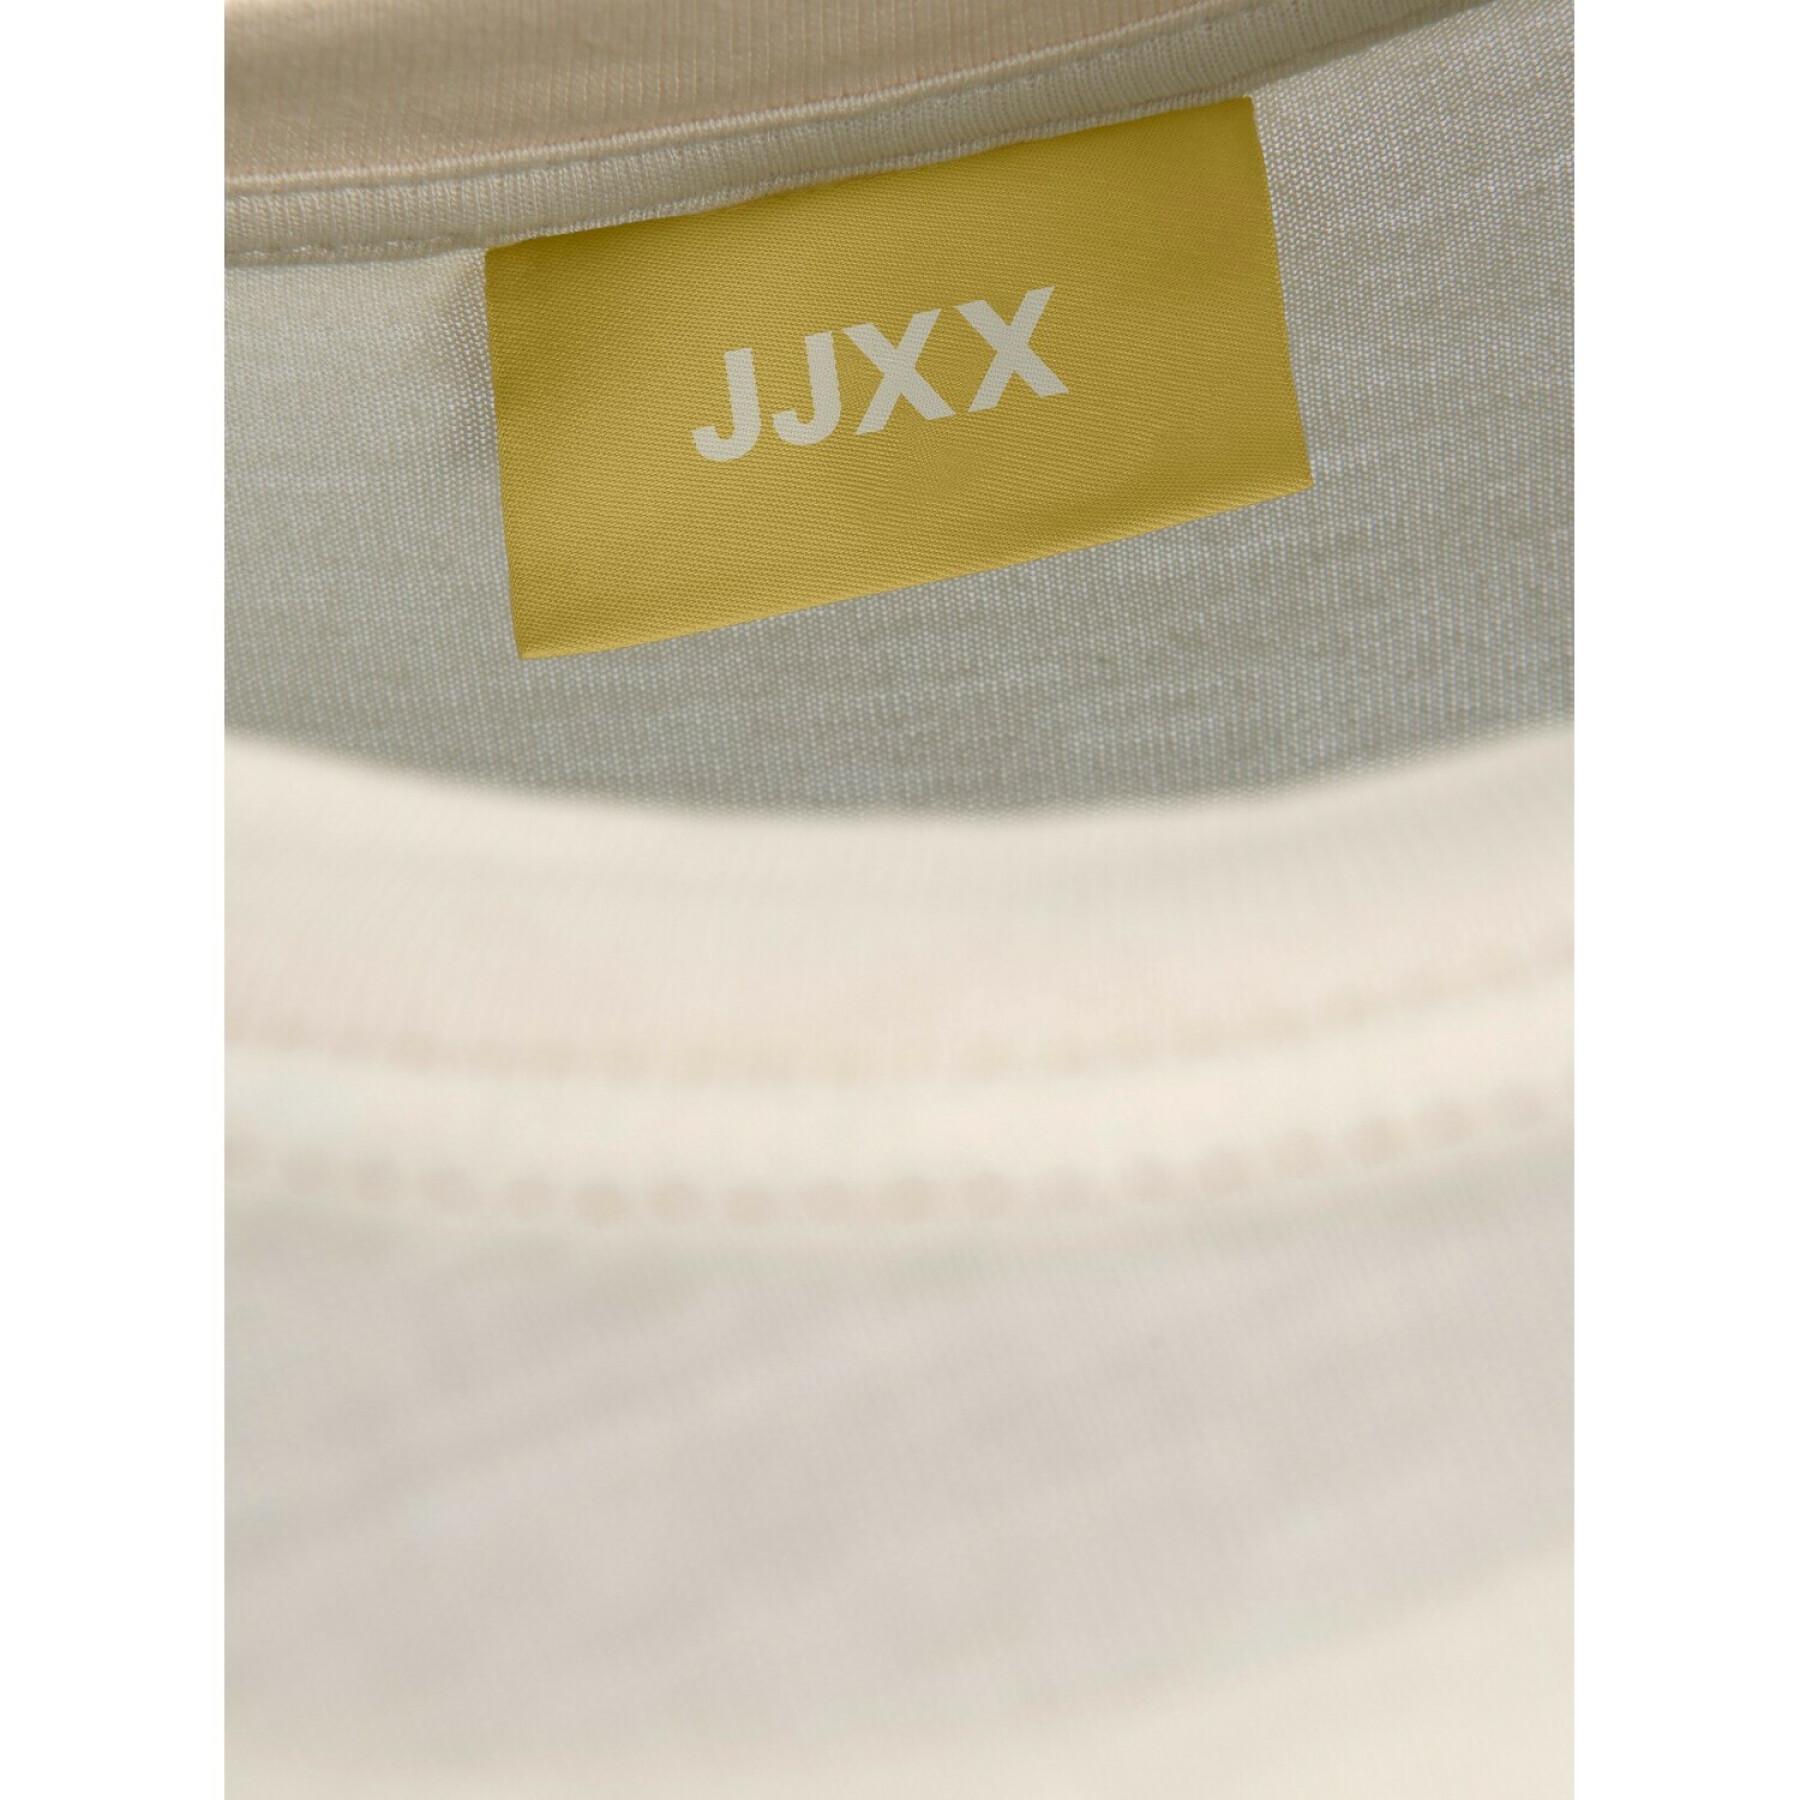 Maglietta da donna JJXX diana